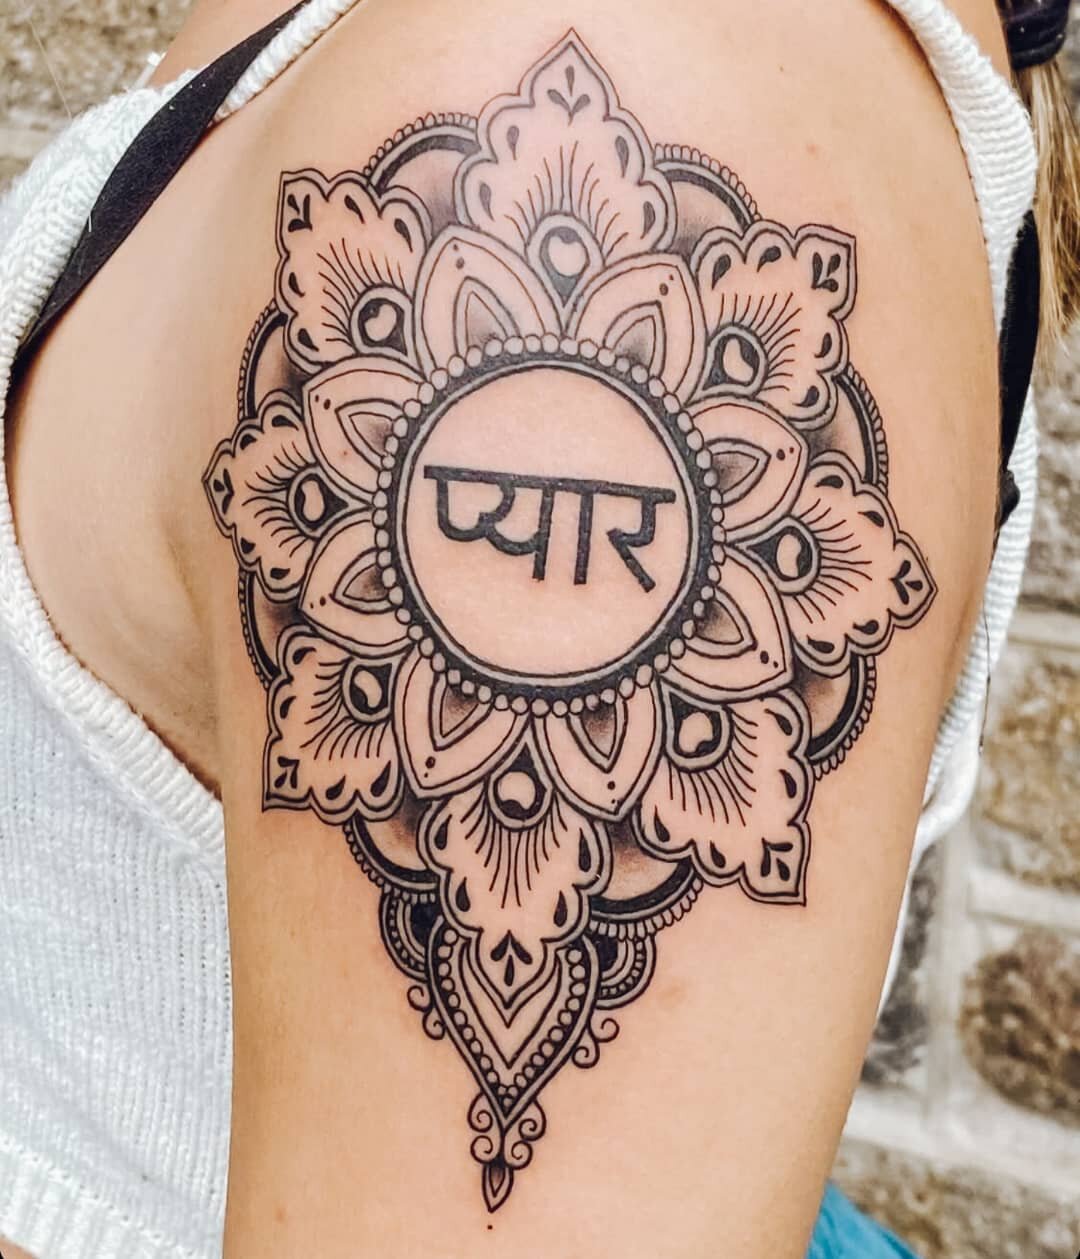 This tattoo most definitely deserves a place on the feed. 

Designed by me @radhashenna for @sita_rani108, and tattooed by @mckietattoo

#hennatattoo #mandalatattoo #shouldertattoo #inktattoo #hennainktattoo #mandqlatattoodesign #nztattooartist #chri